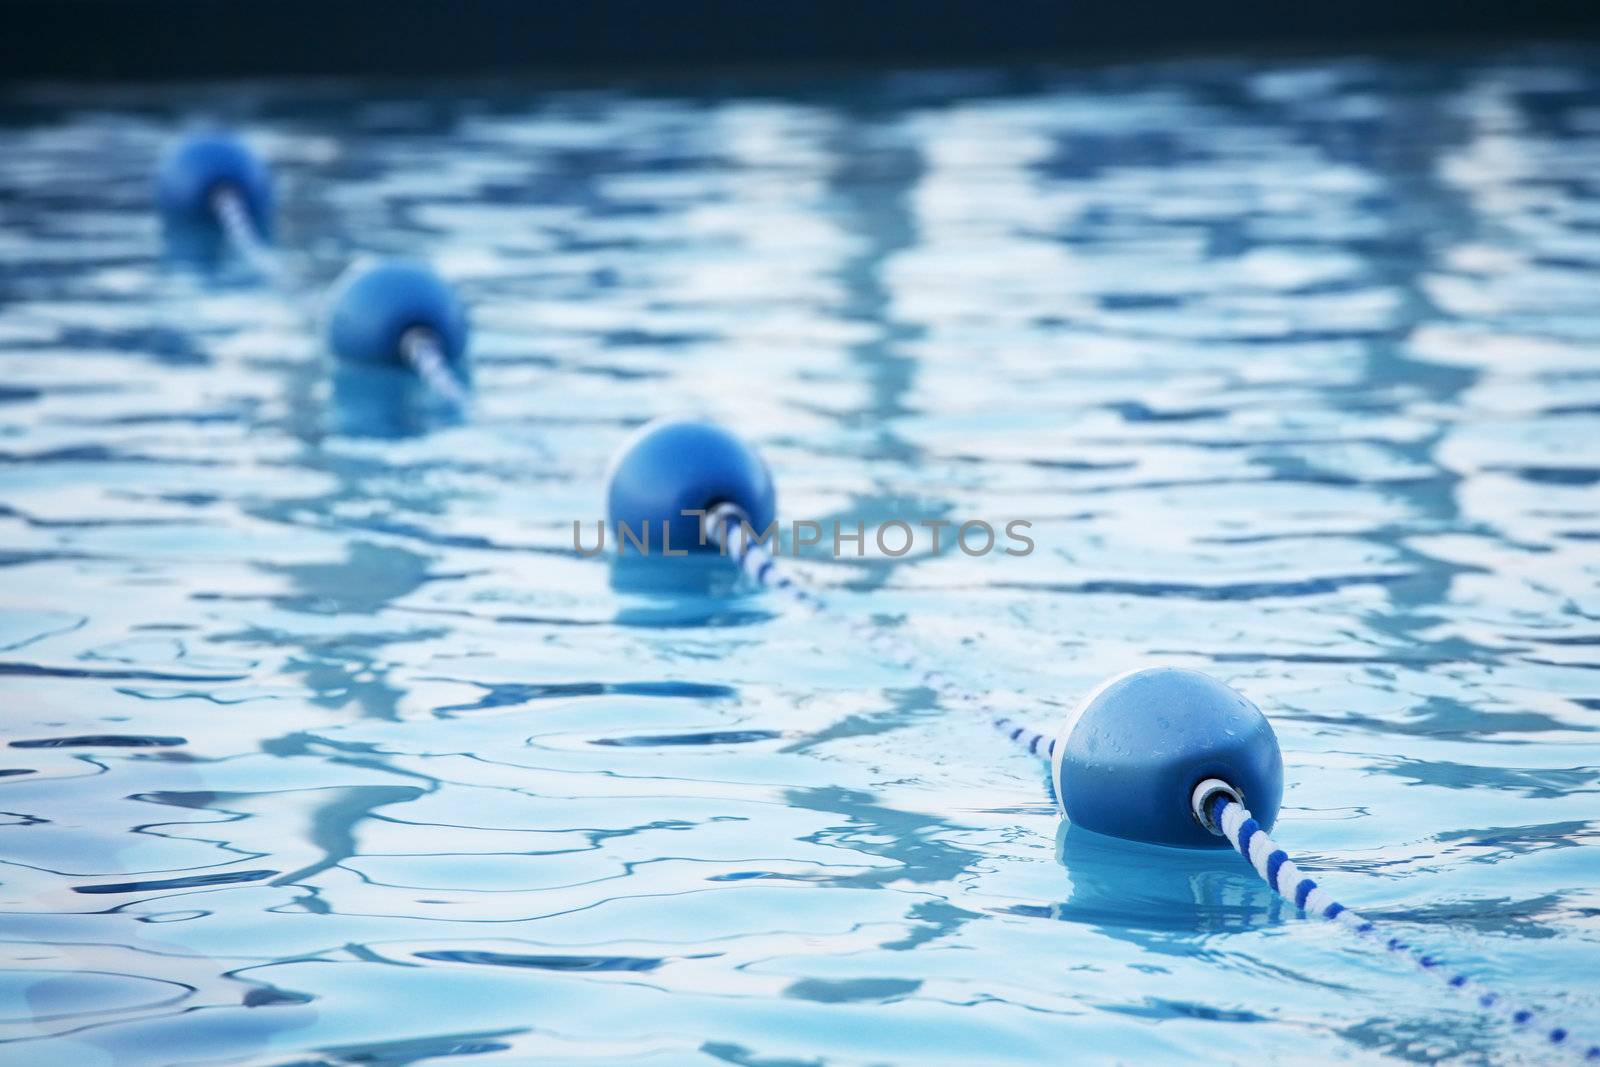 Blue water buoys in pool by jarenwicklund